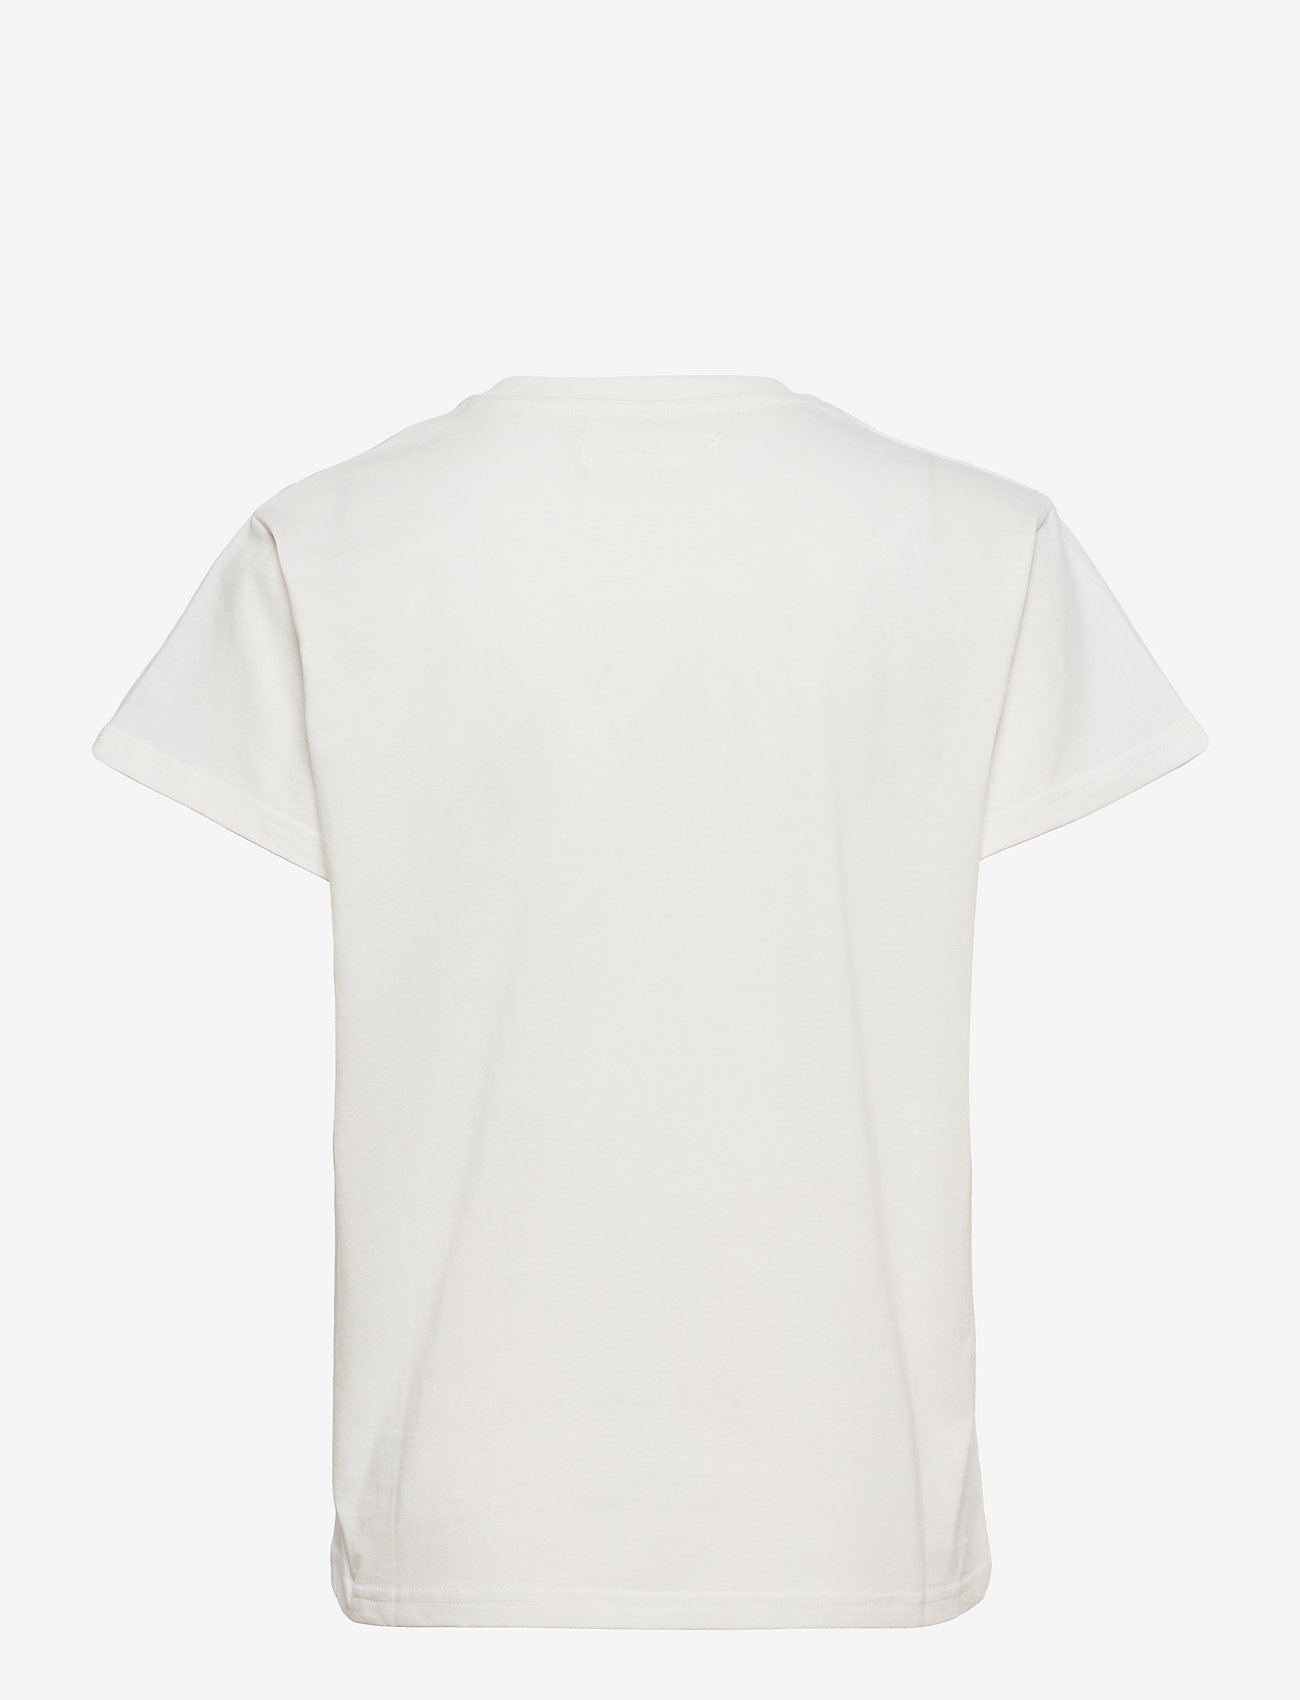 Sofie Schnoor - T-shirt - t-shirts - off white - 1